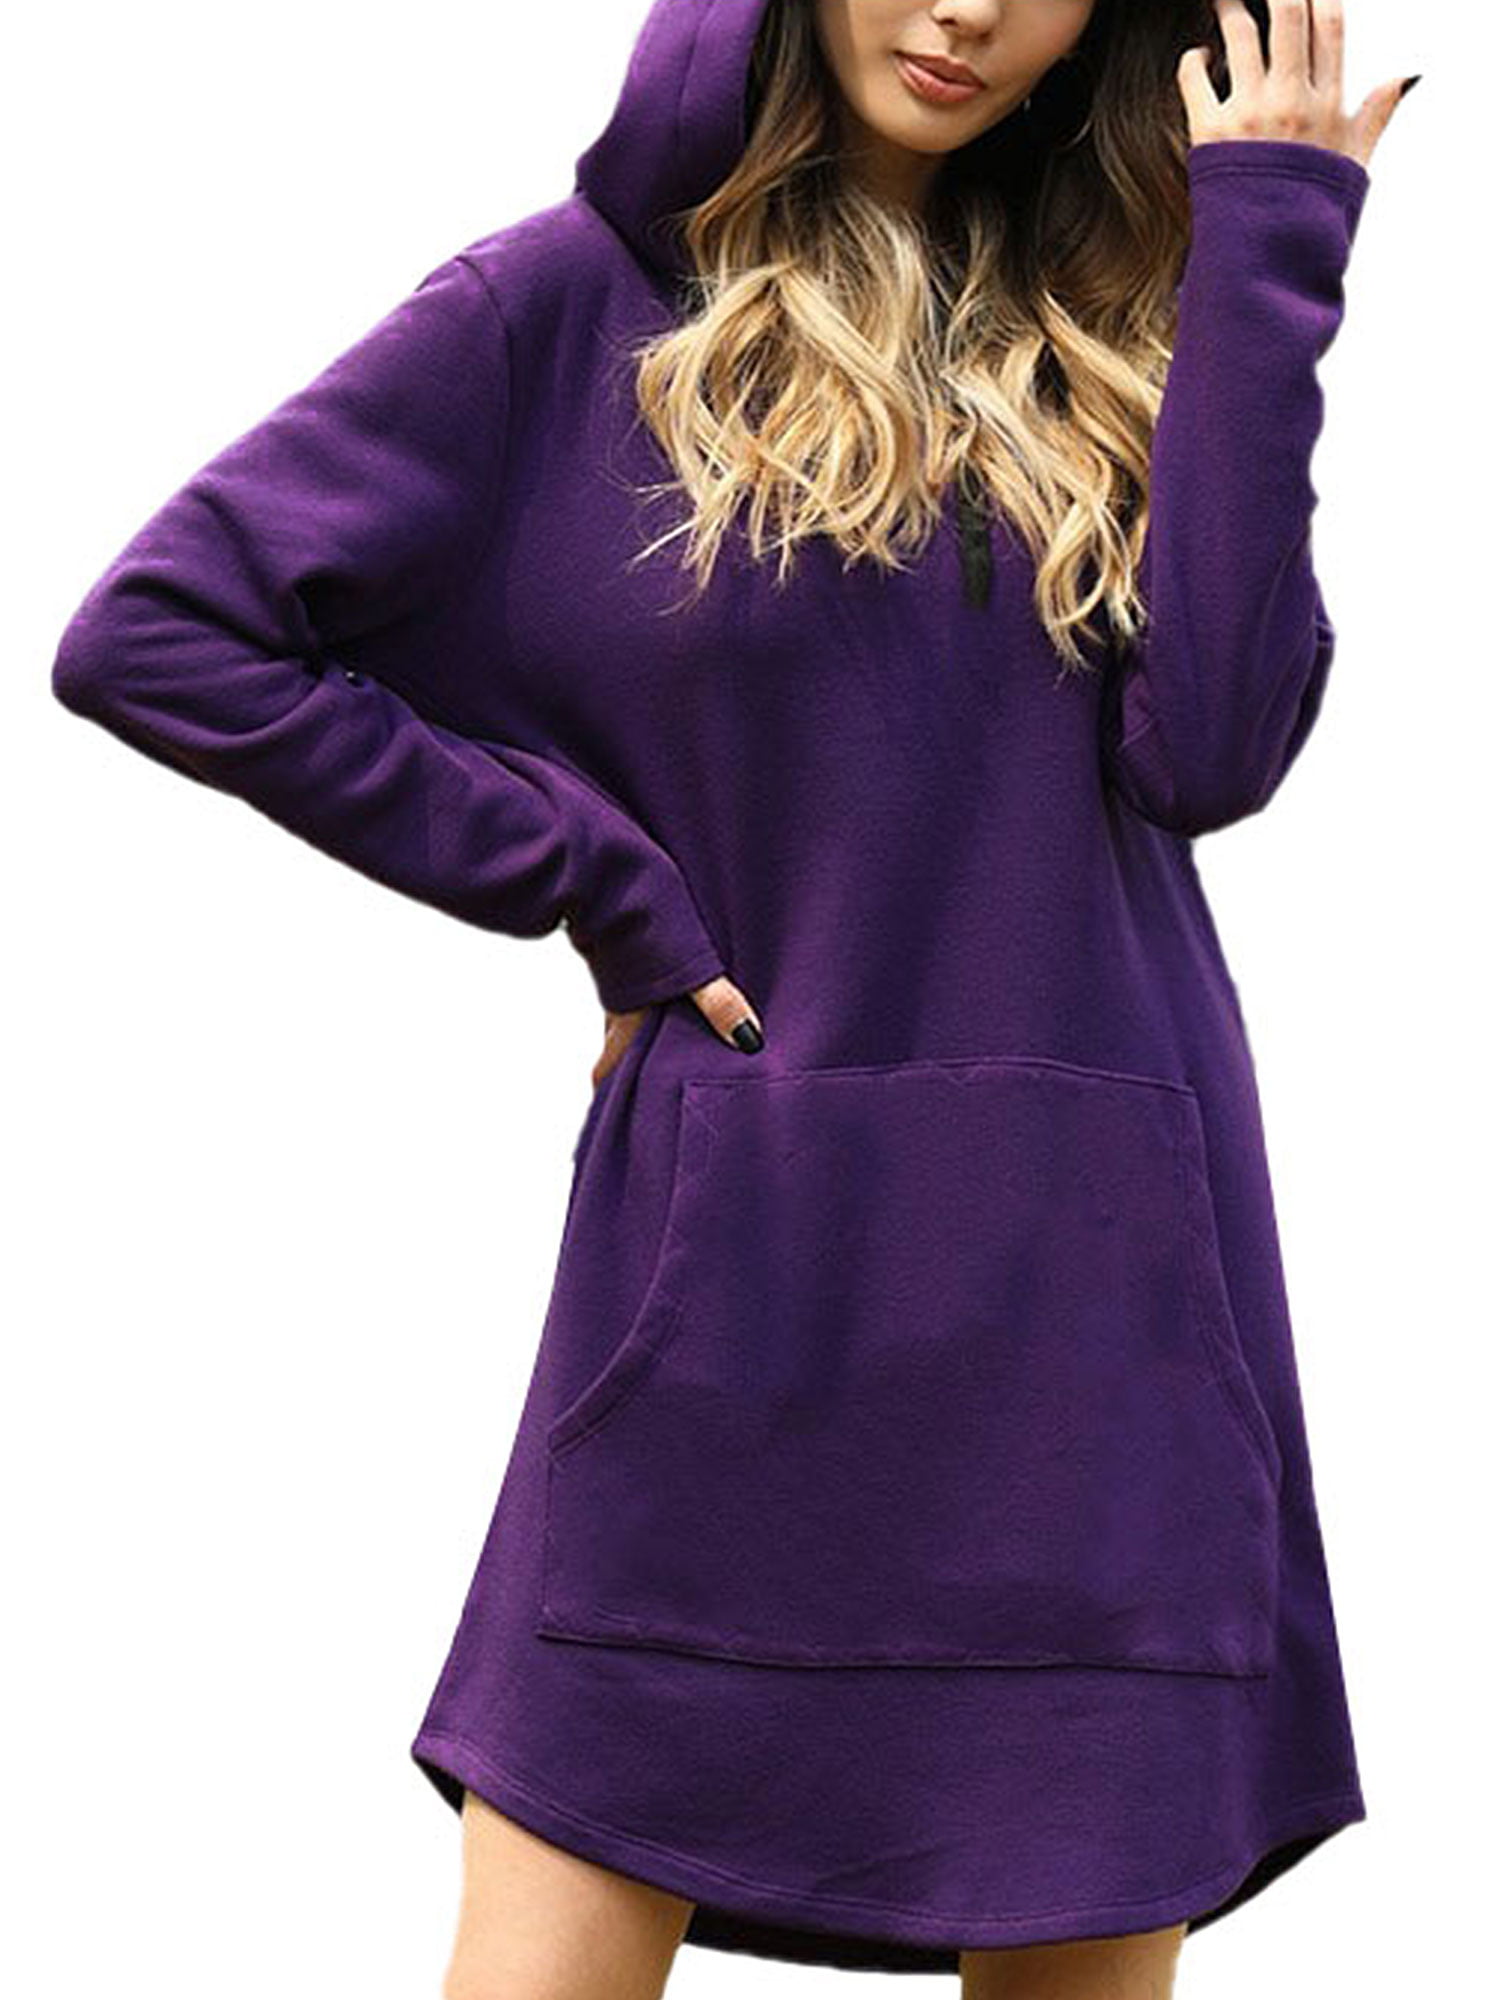 GIKING Womens Hoodies Long Sleeve Tunic Pullover Sweatshirt Maxi Dresses with Kangaroo Pocket